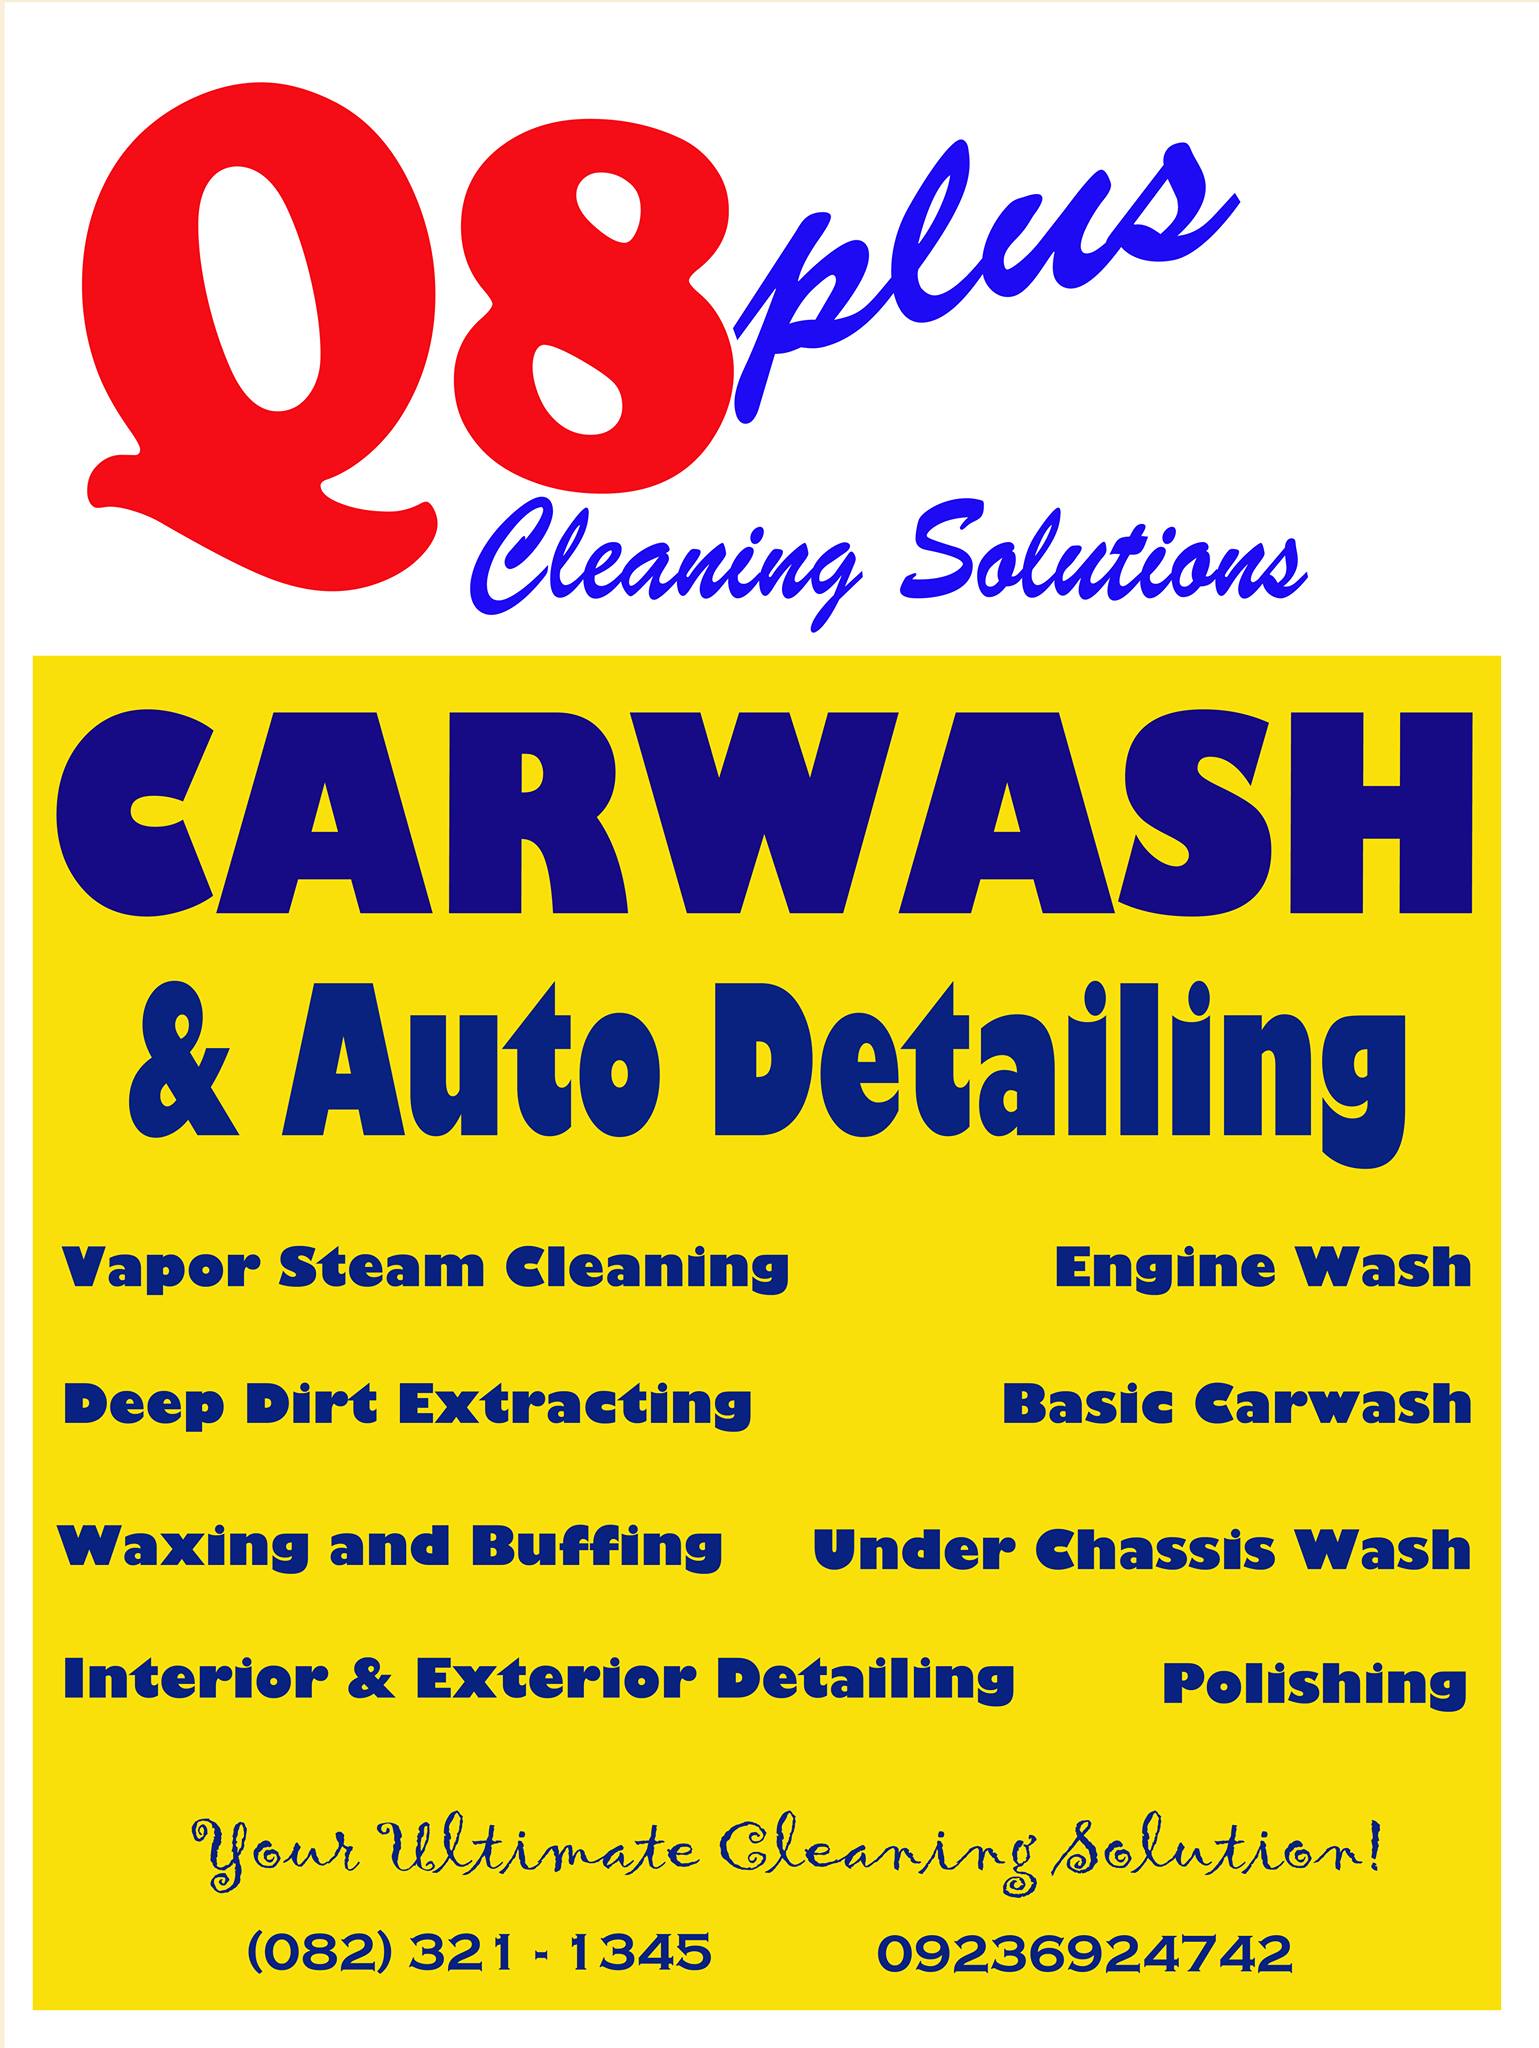 Q8 Plus Car wash & Auto Detailing. 1 PROFILE